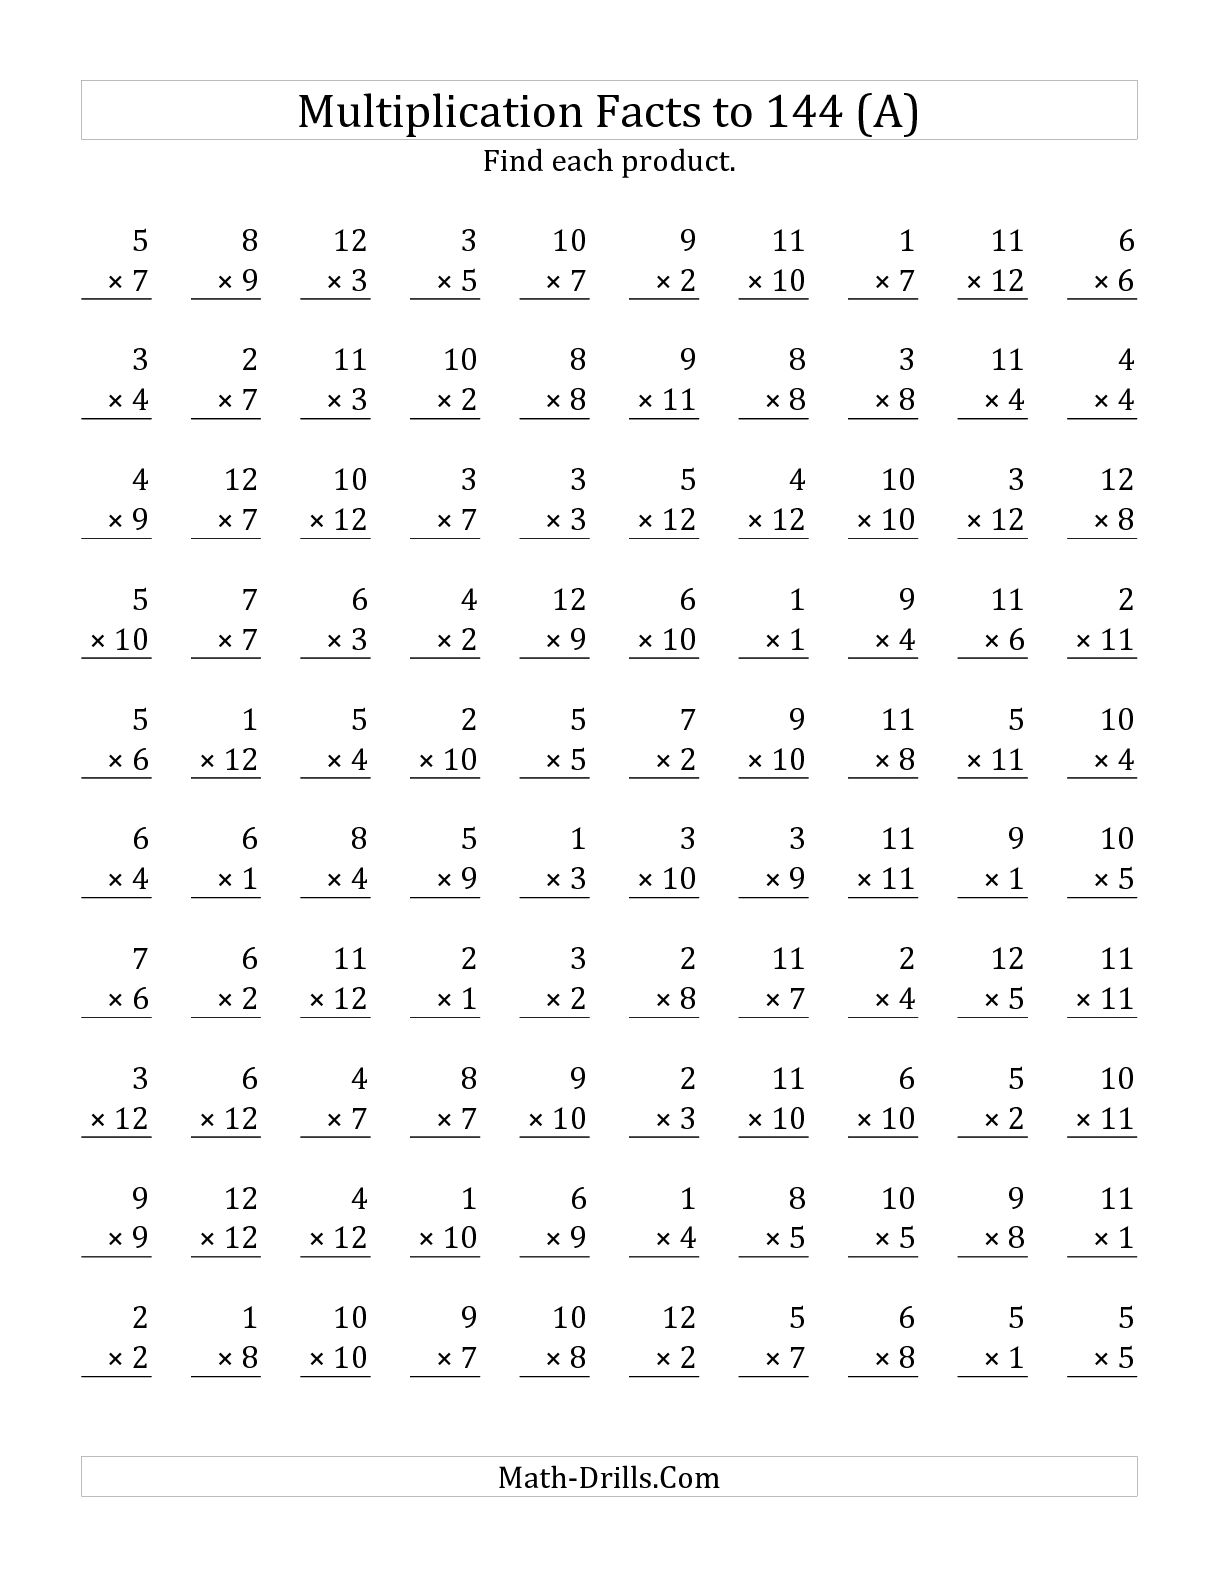 6-best-images-of-math-drills-multiplication-worksheets-printable-math-fact-worksheets